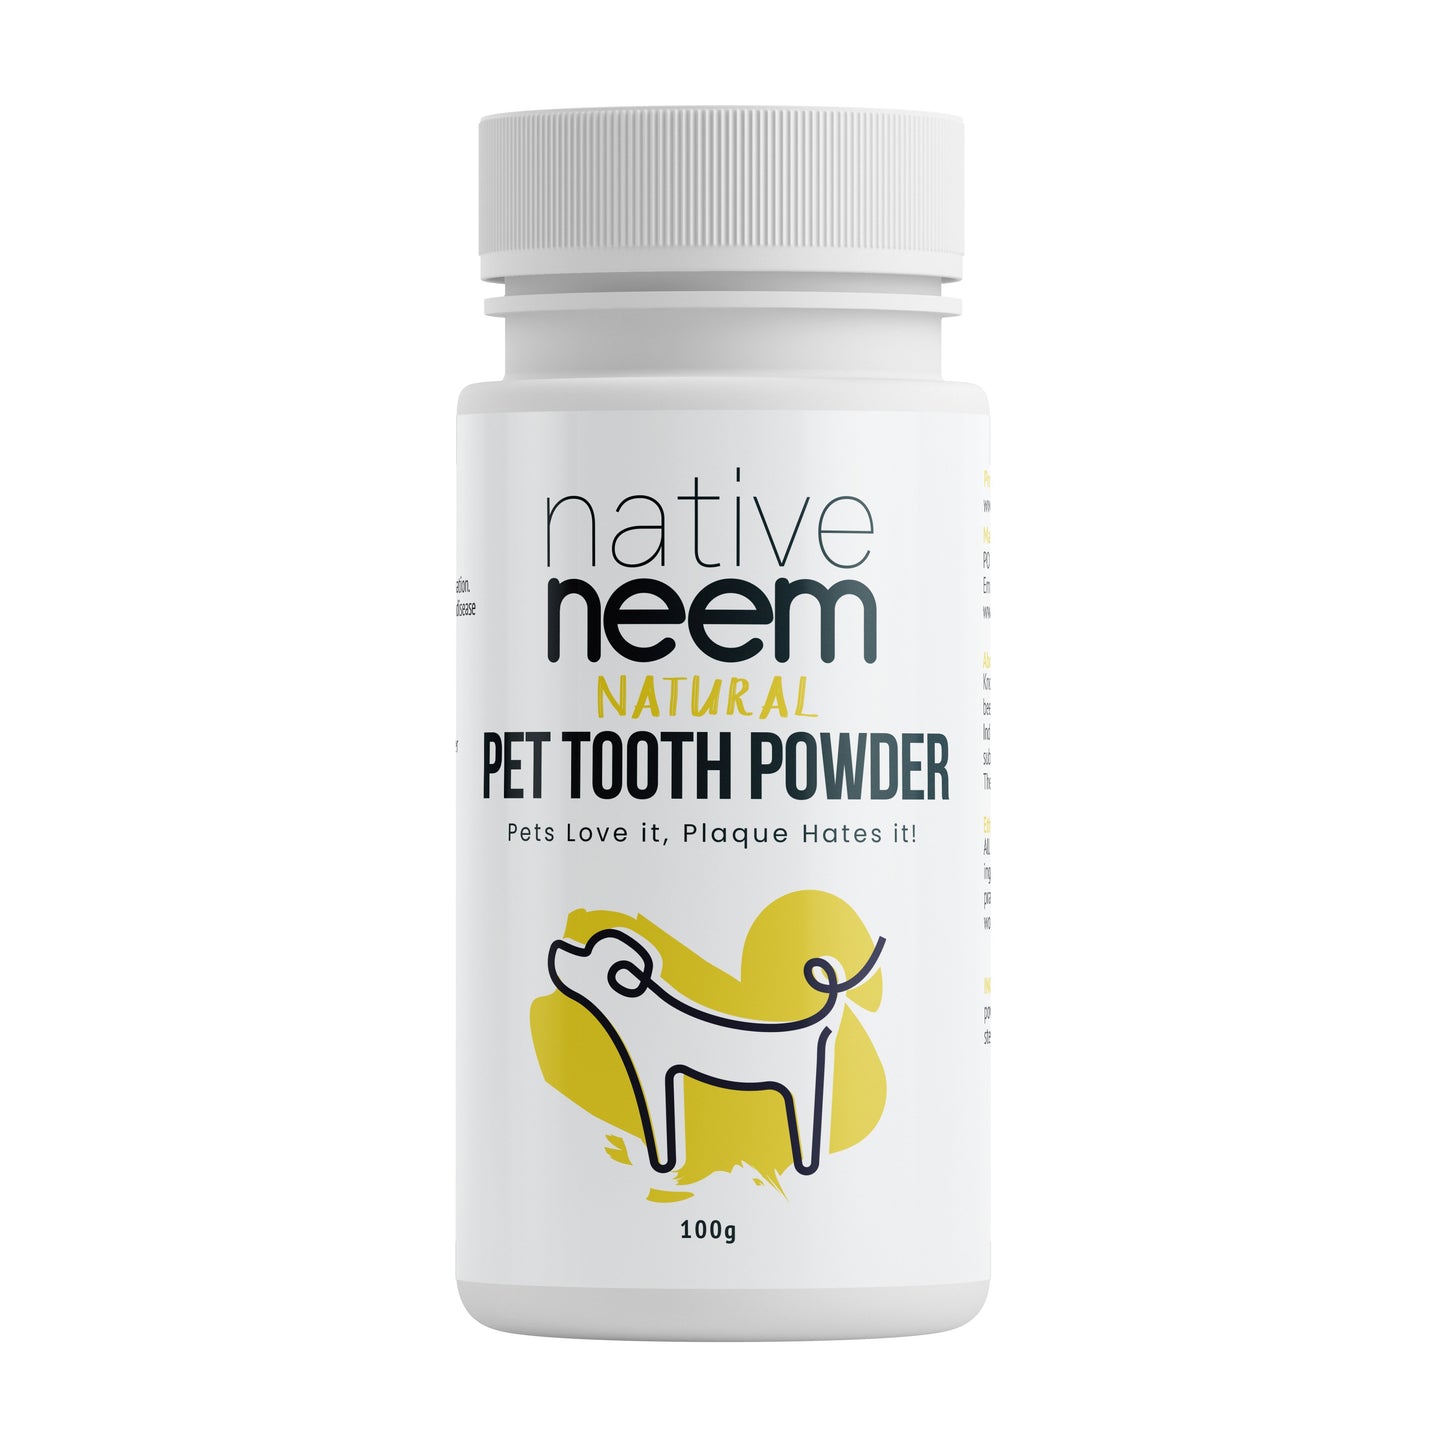 Organic Neem Pet Tooth Powder 100g - NativeNeem